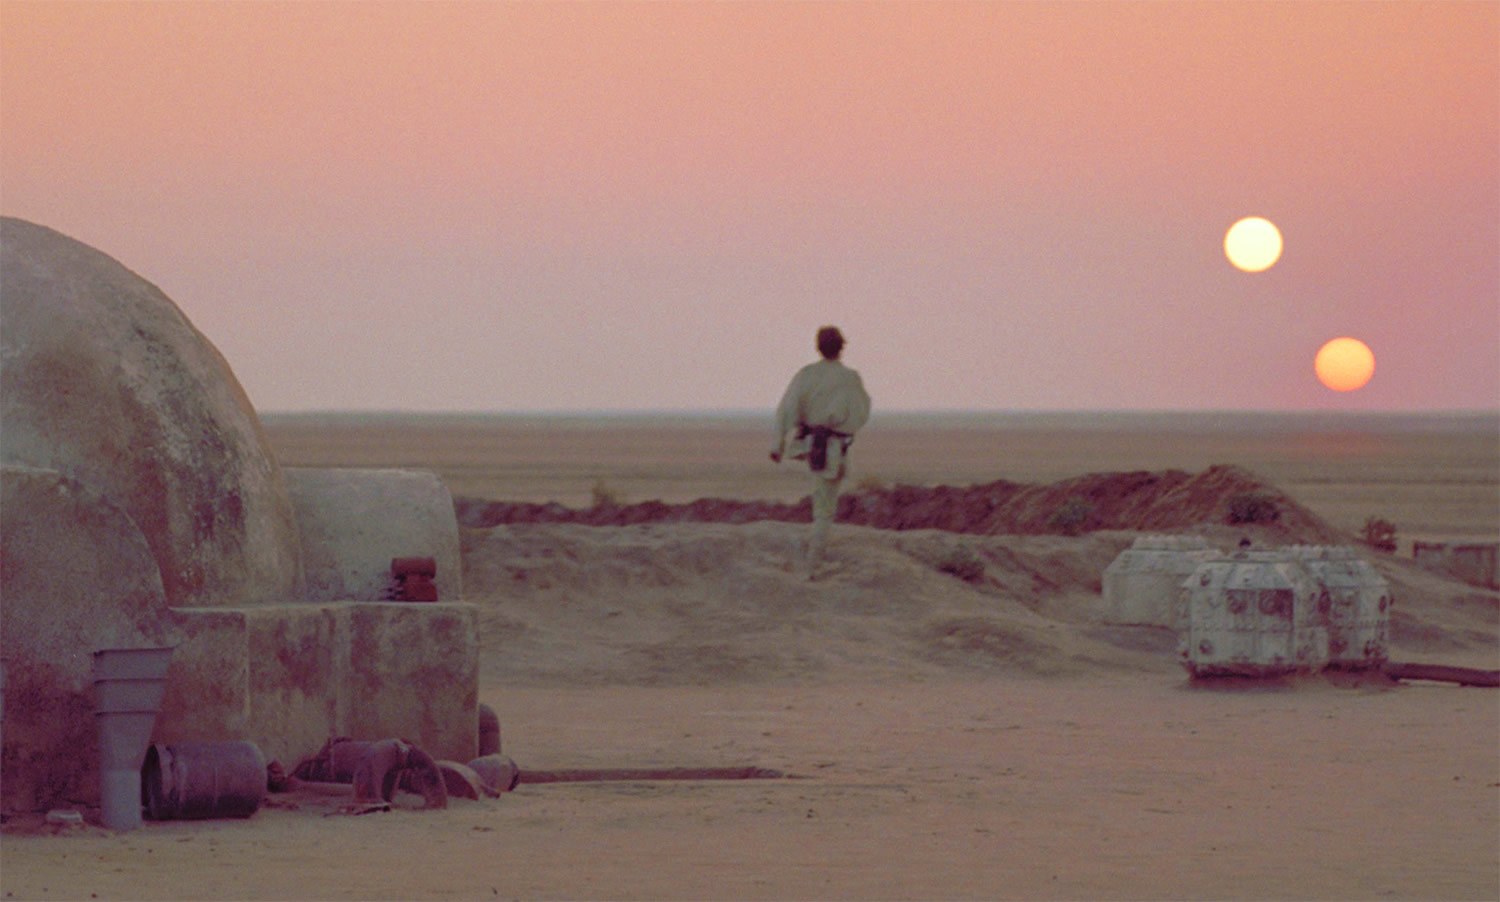 Luke on the farm at sunset - Star Wars